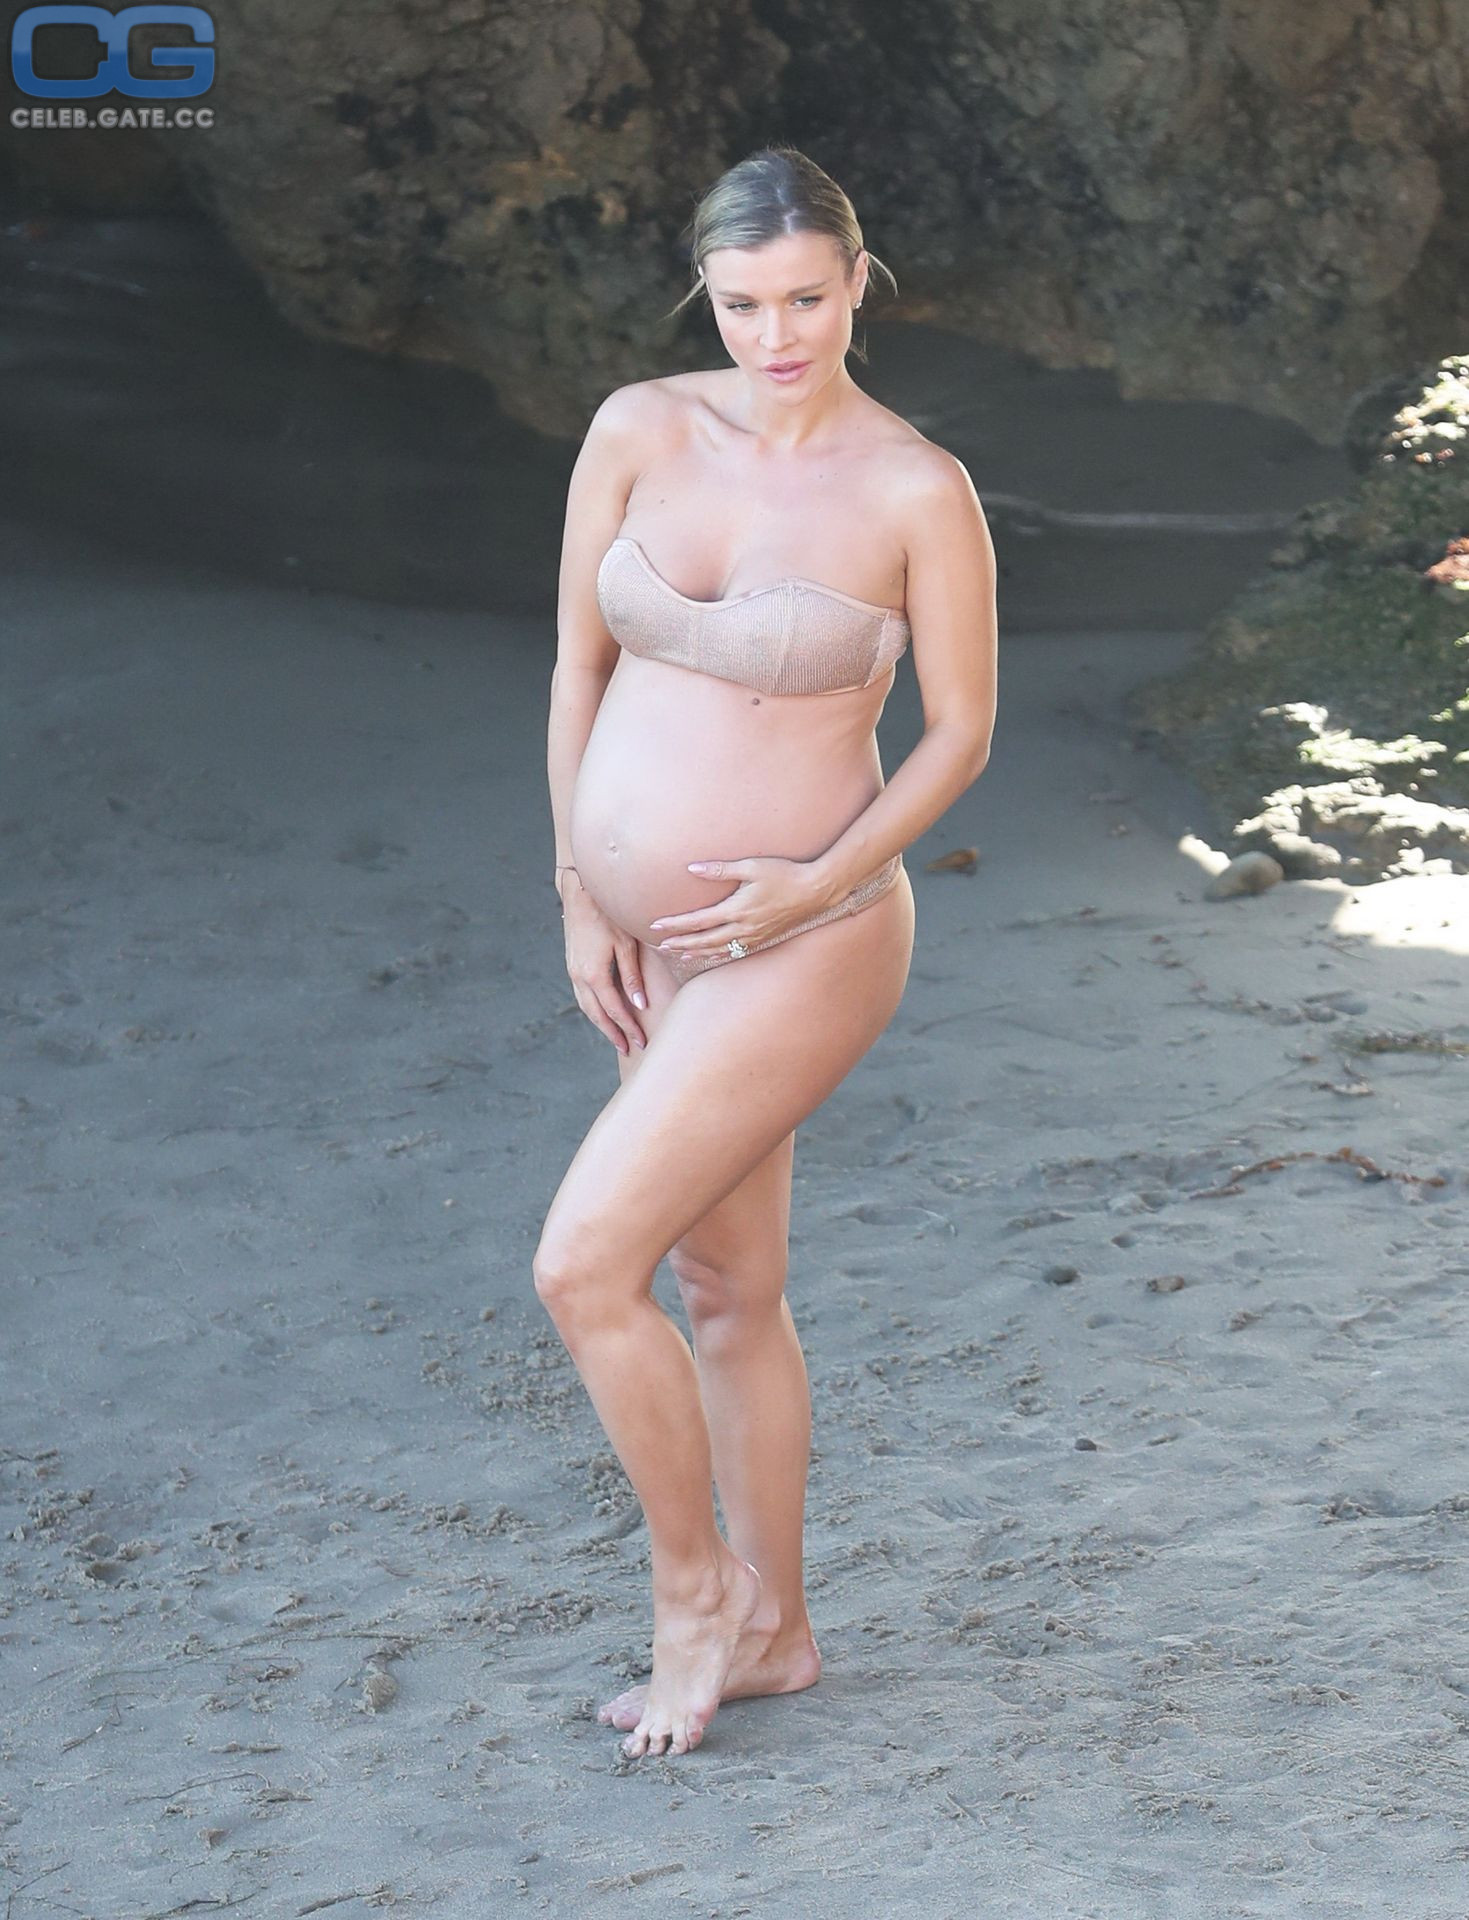 Joanna Krupa pregnant